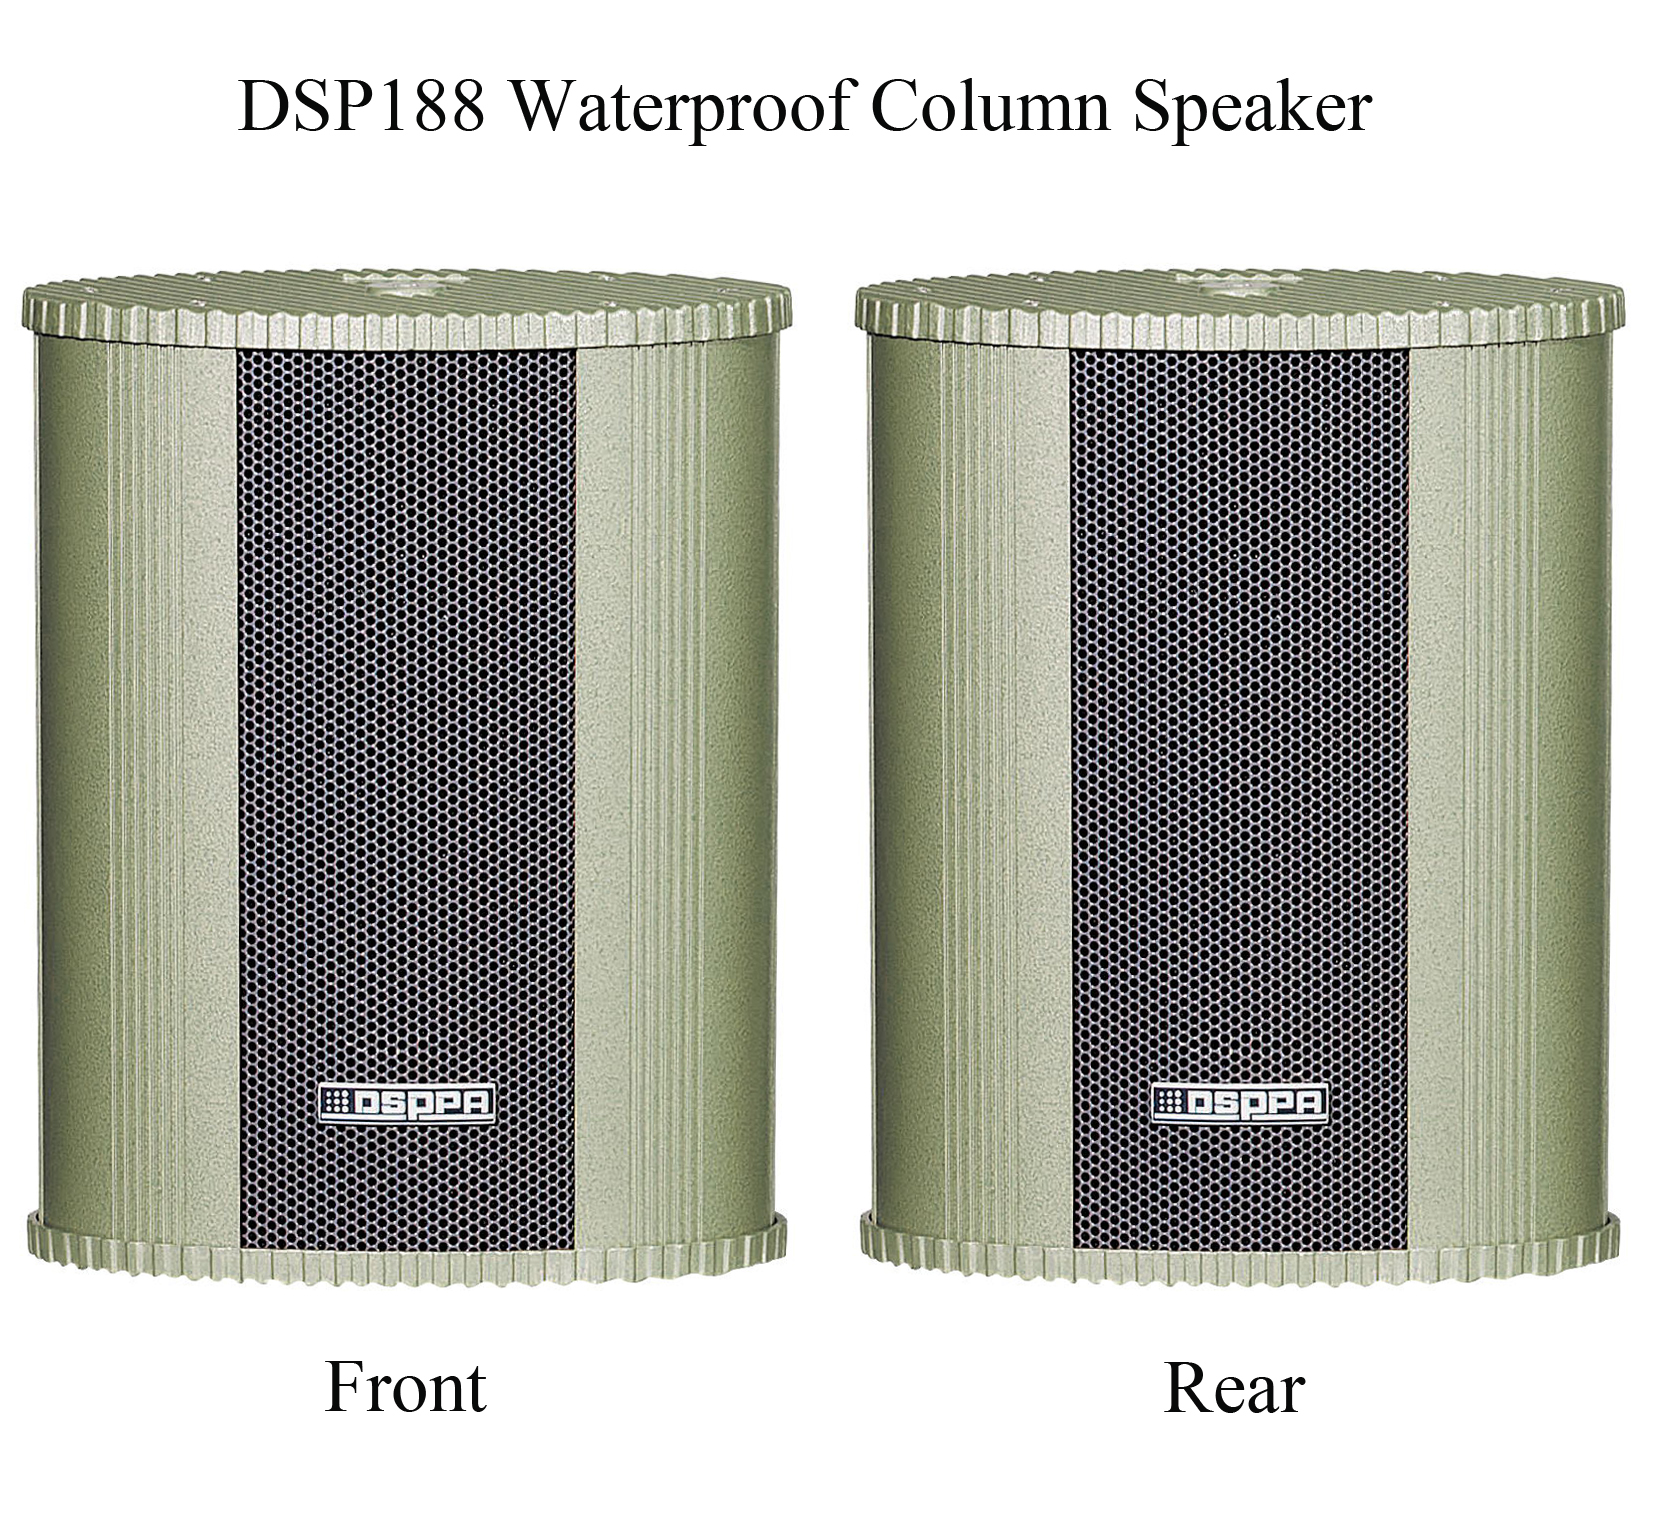 DSP188 Waterproof Column Speaker